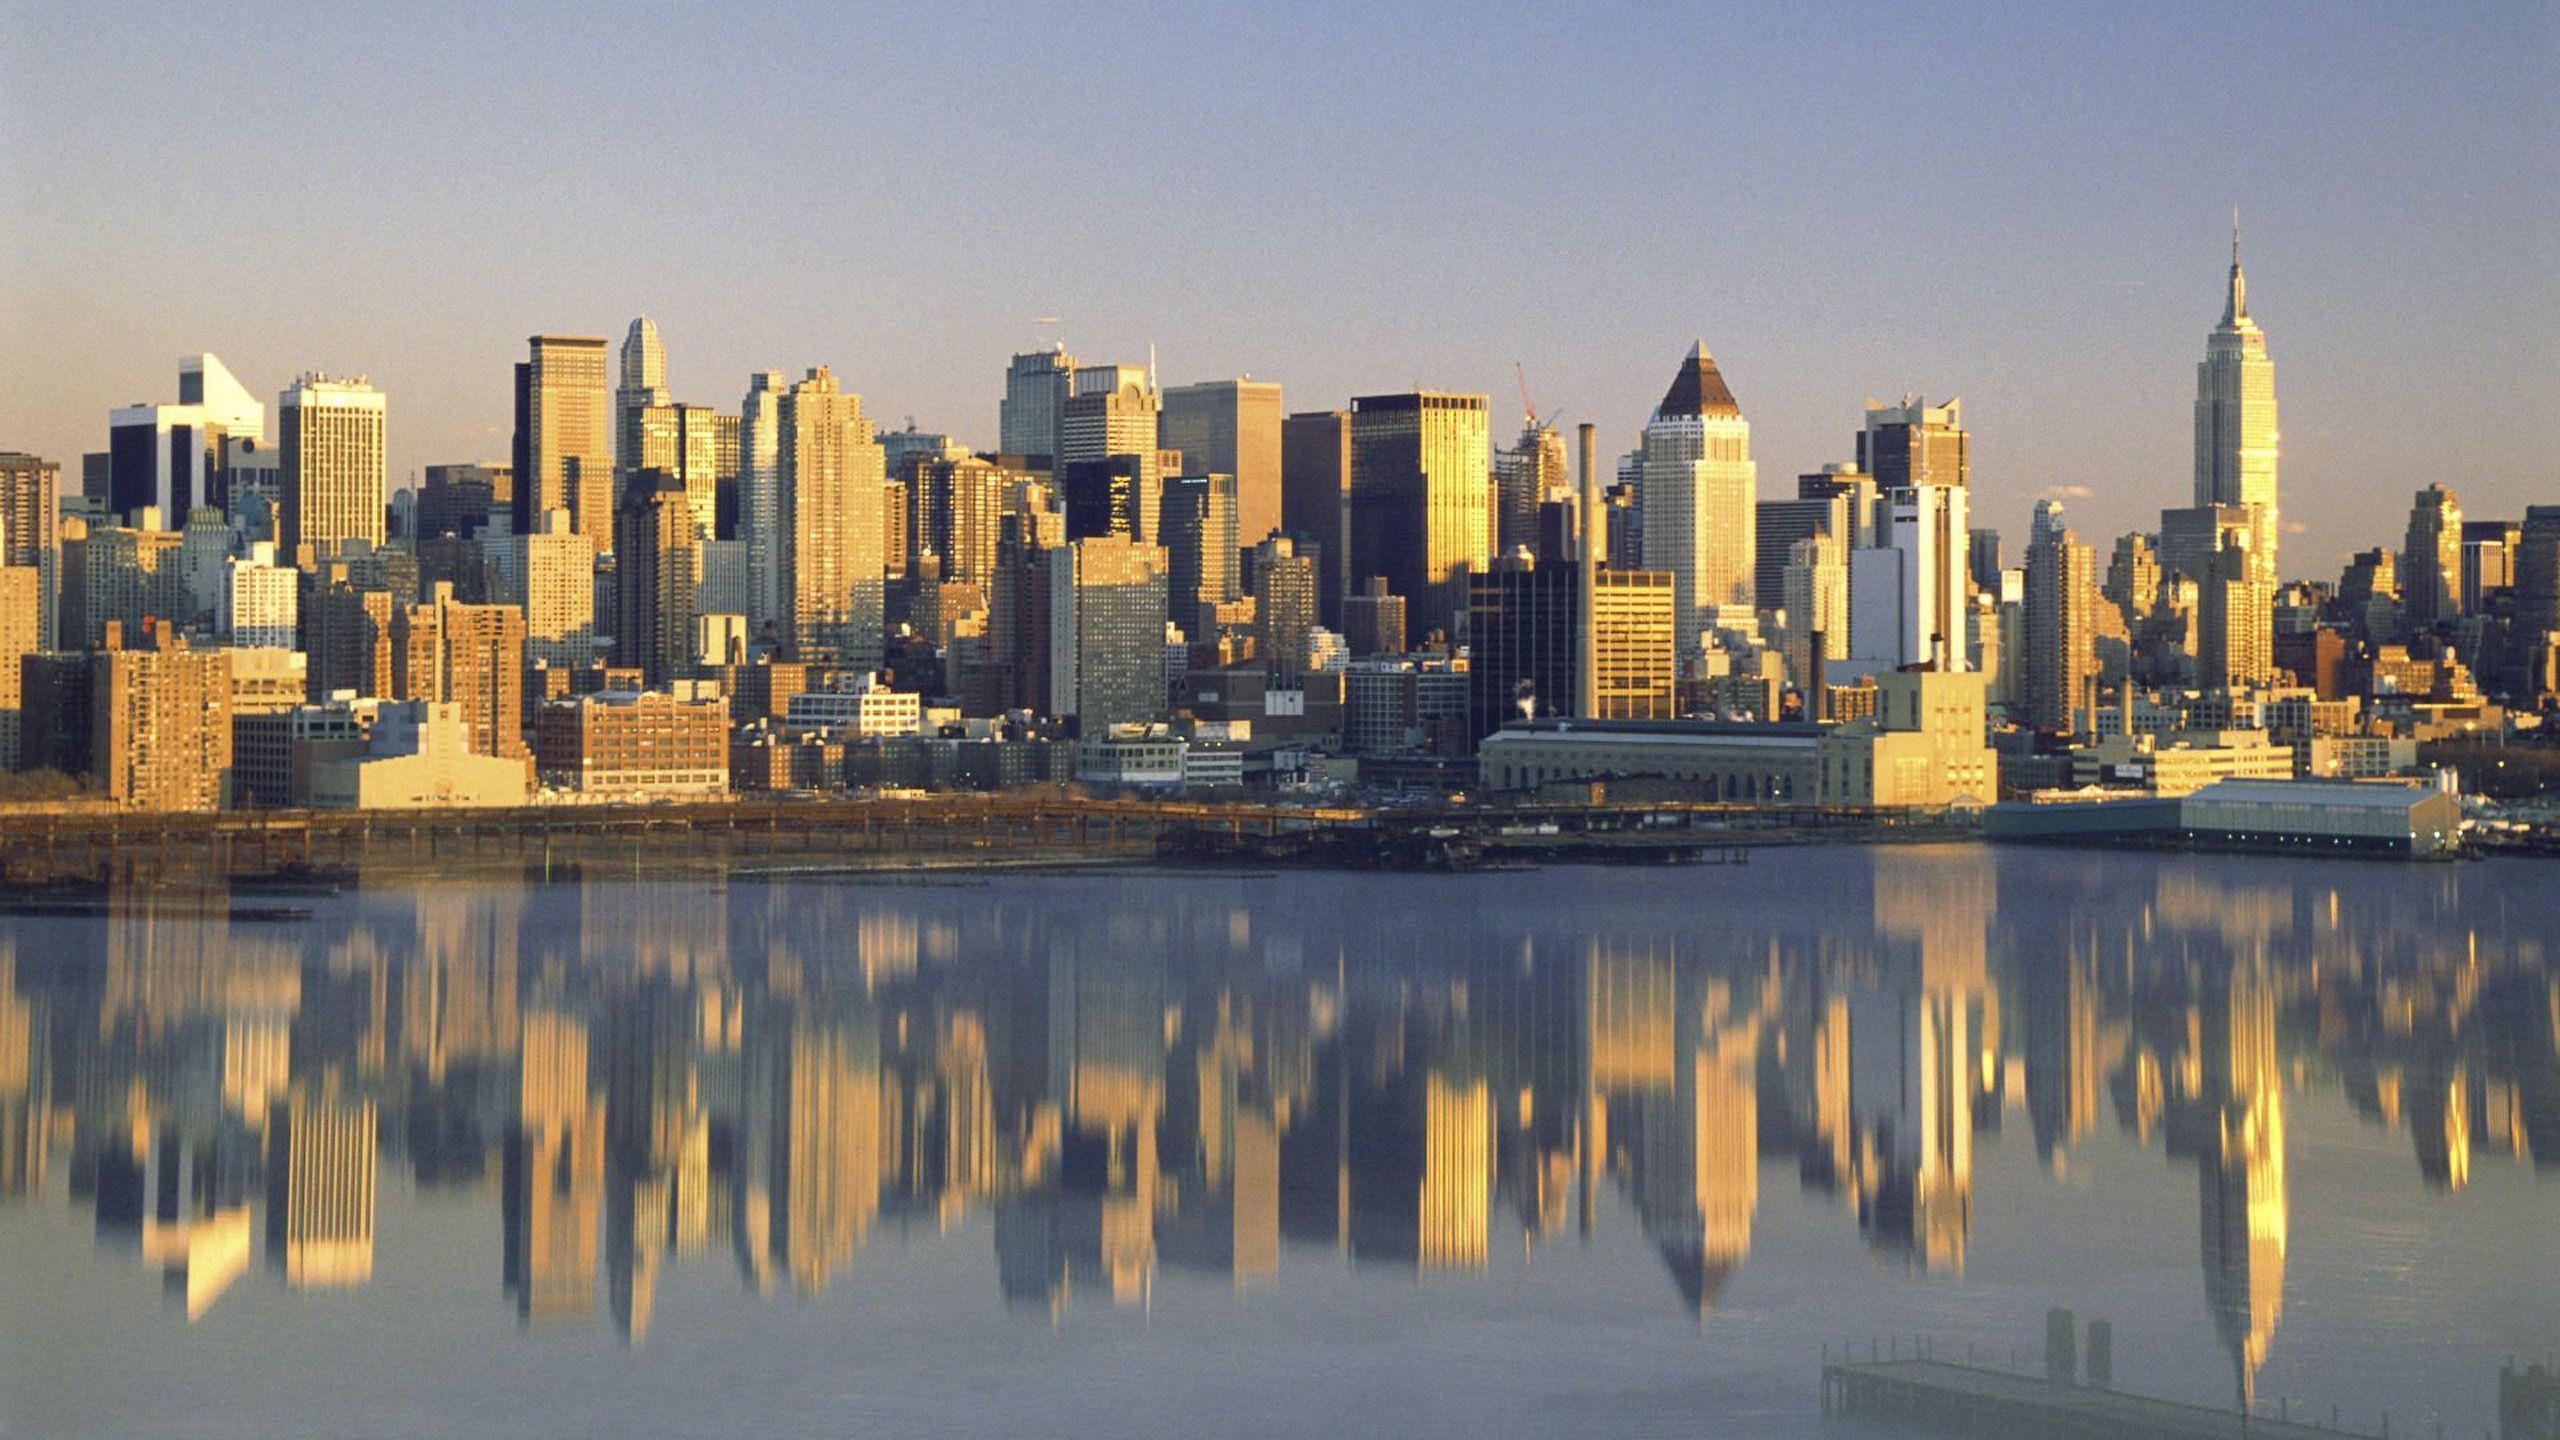 New York City Skyline Wallpapers 2560x1440PX ~ New York Skyline